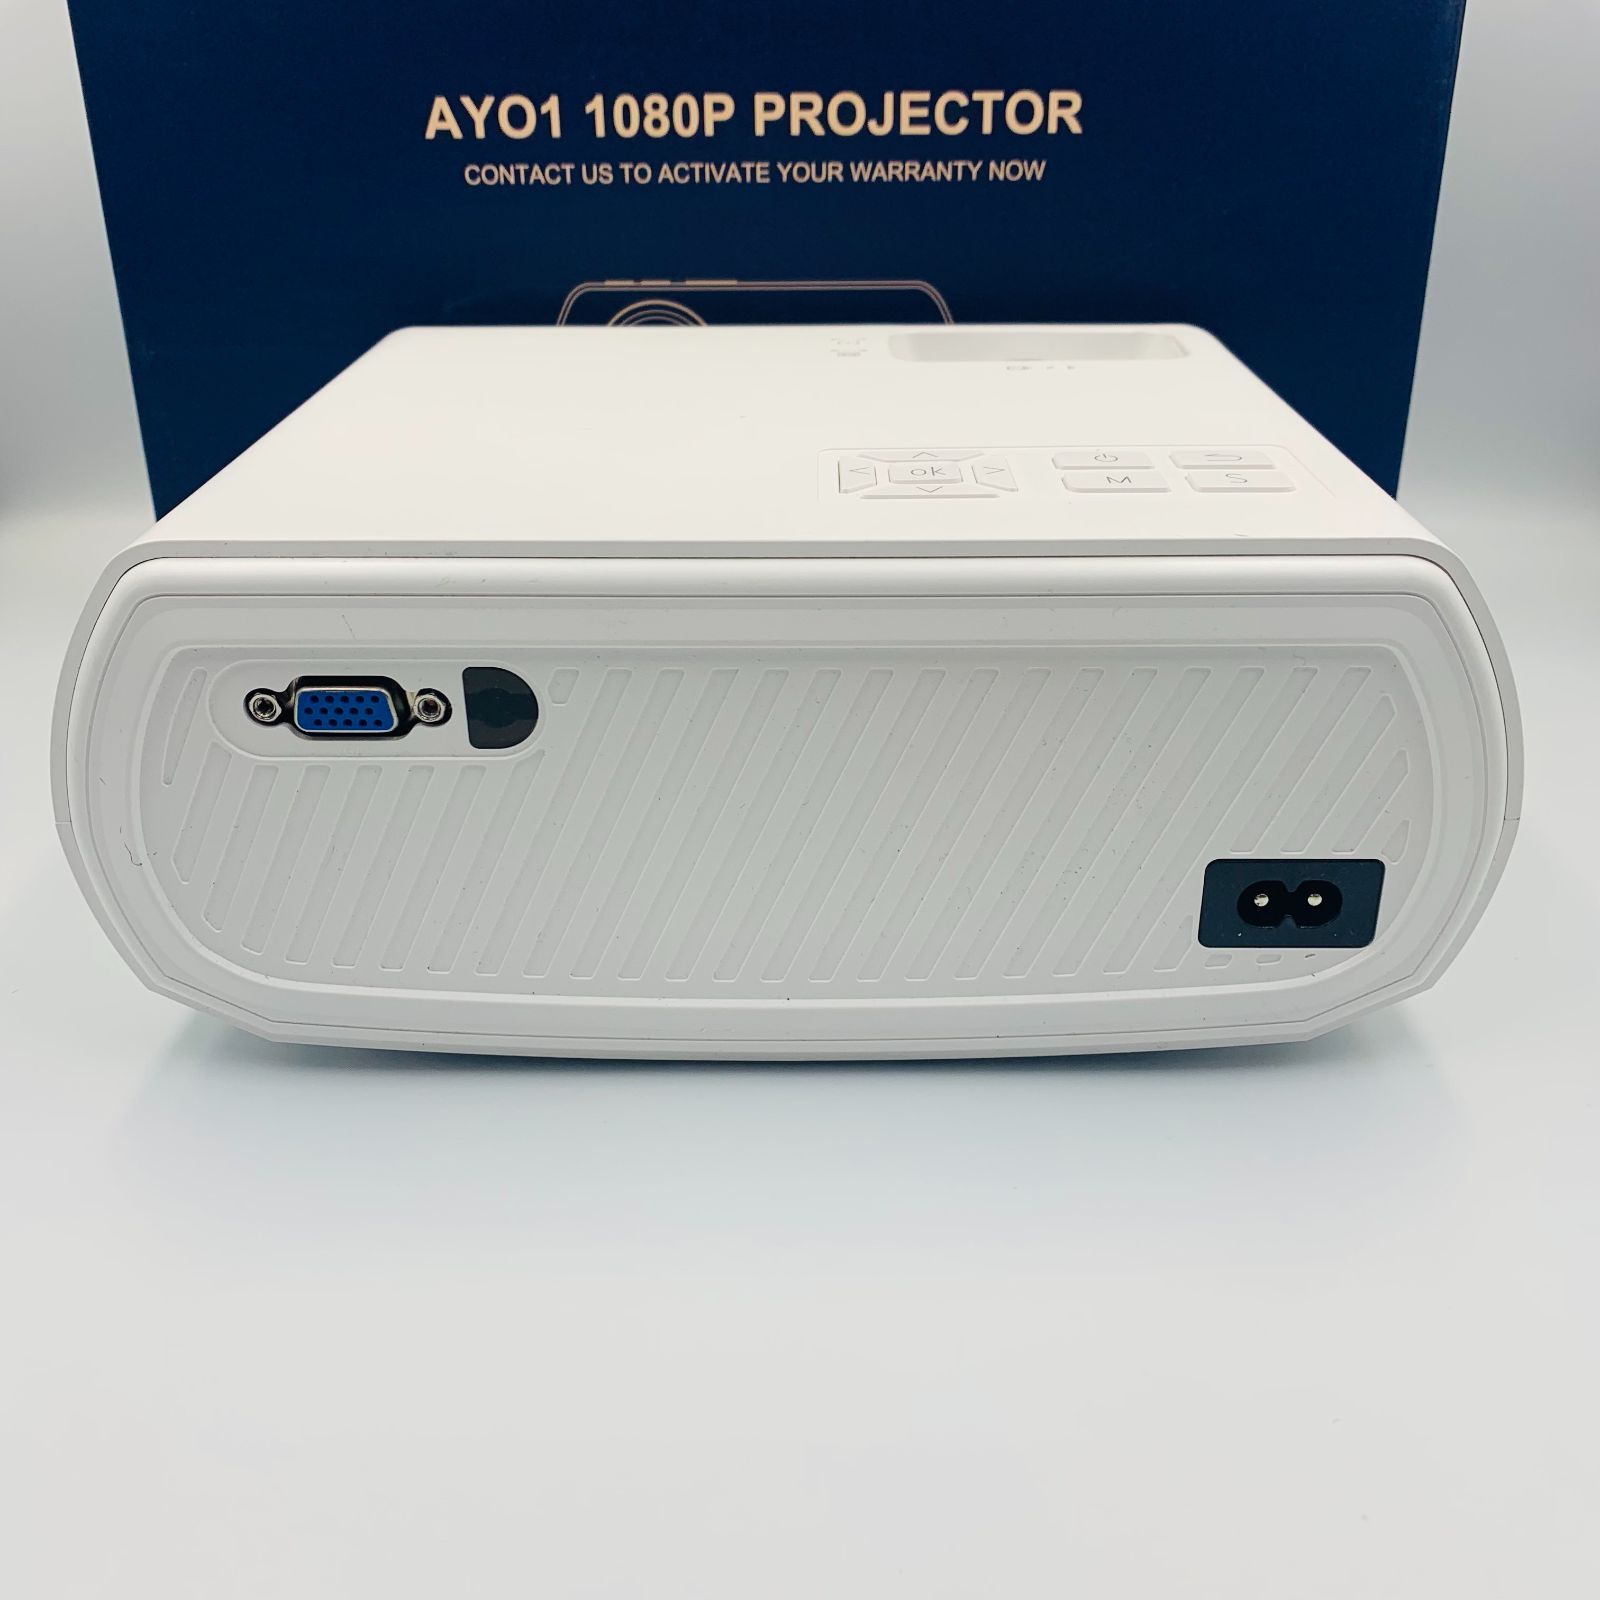 onoayo 1080P Projector プロジェクター - プロジェクター